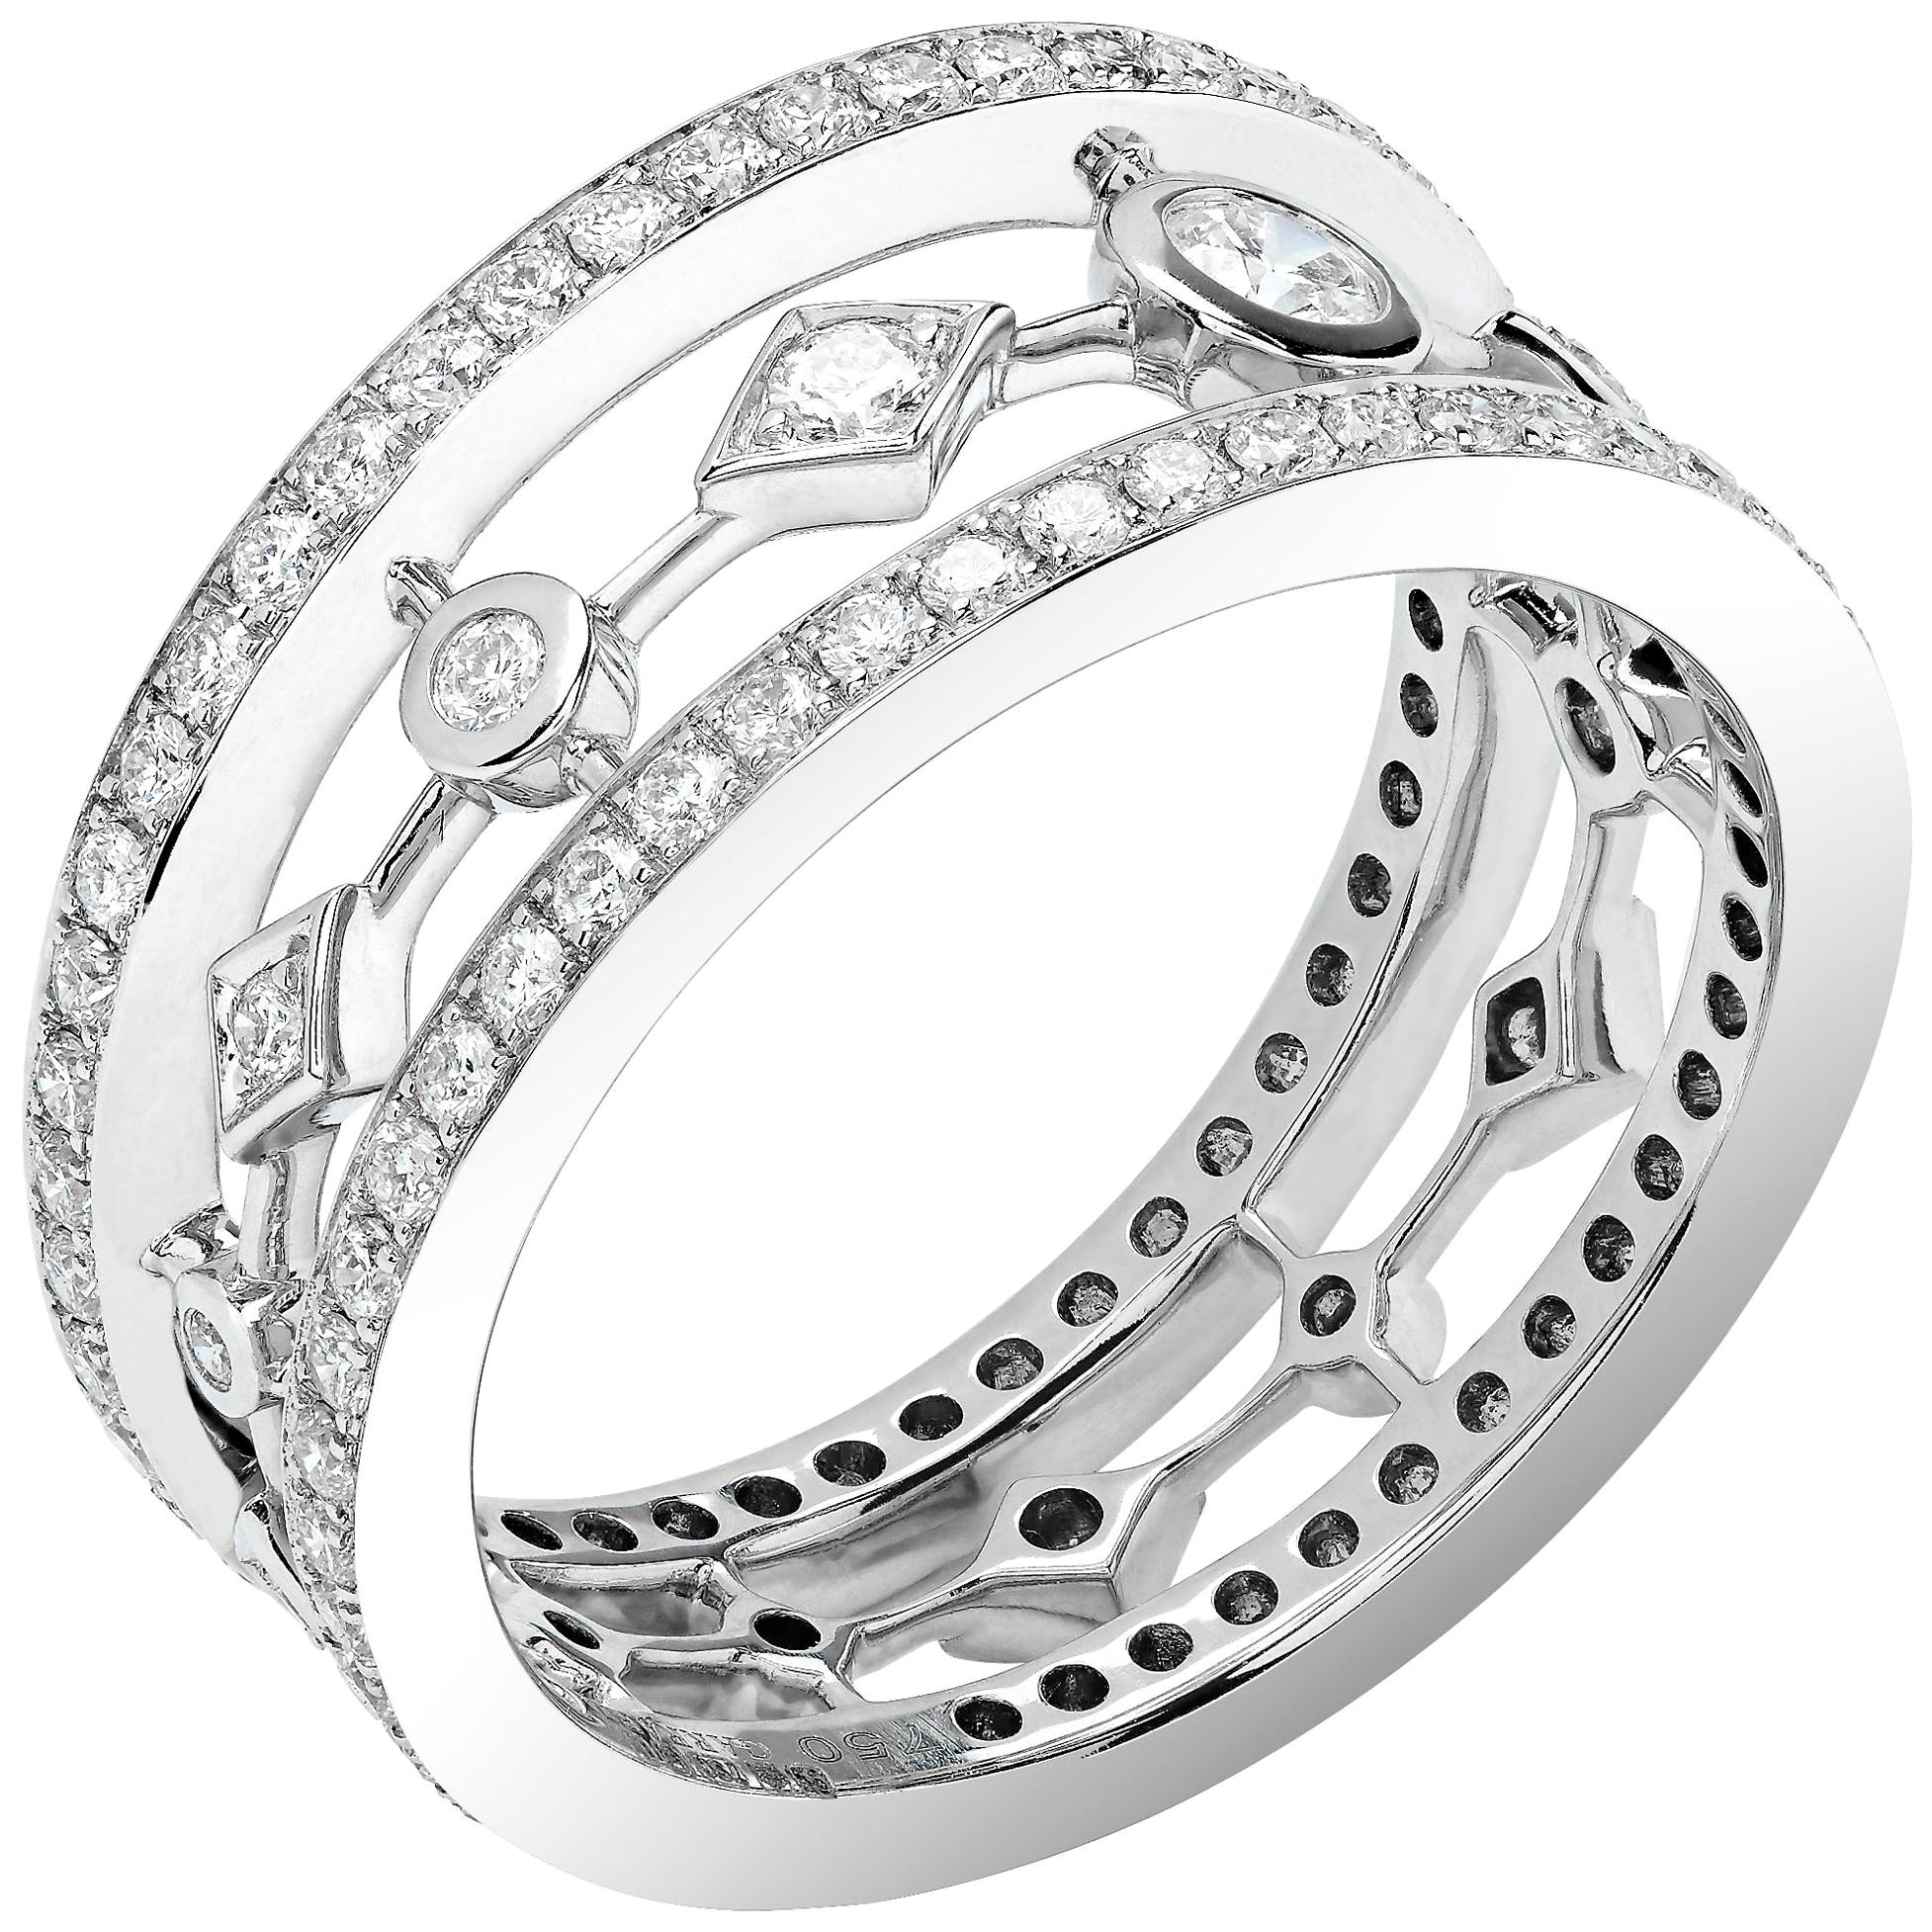 Garrard 'Fanfare' 18 Karat White and Gold White Diamond Ring For Sale